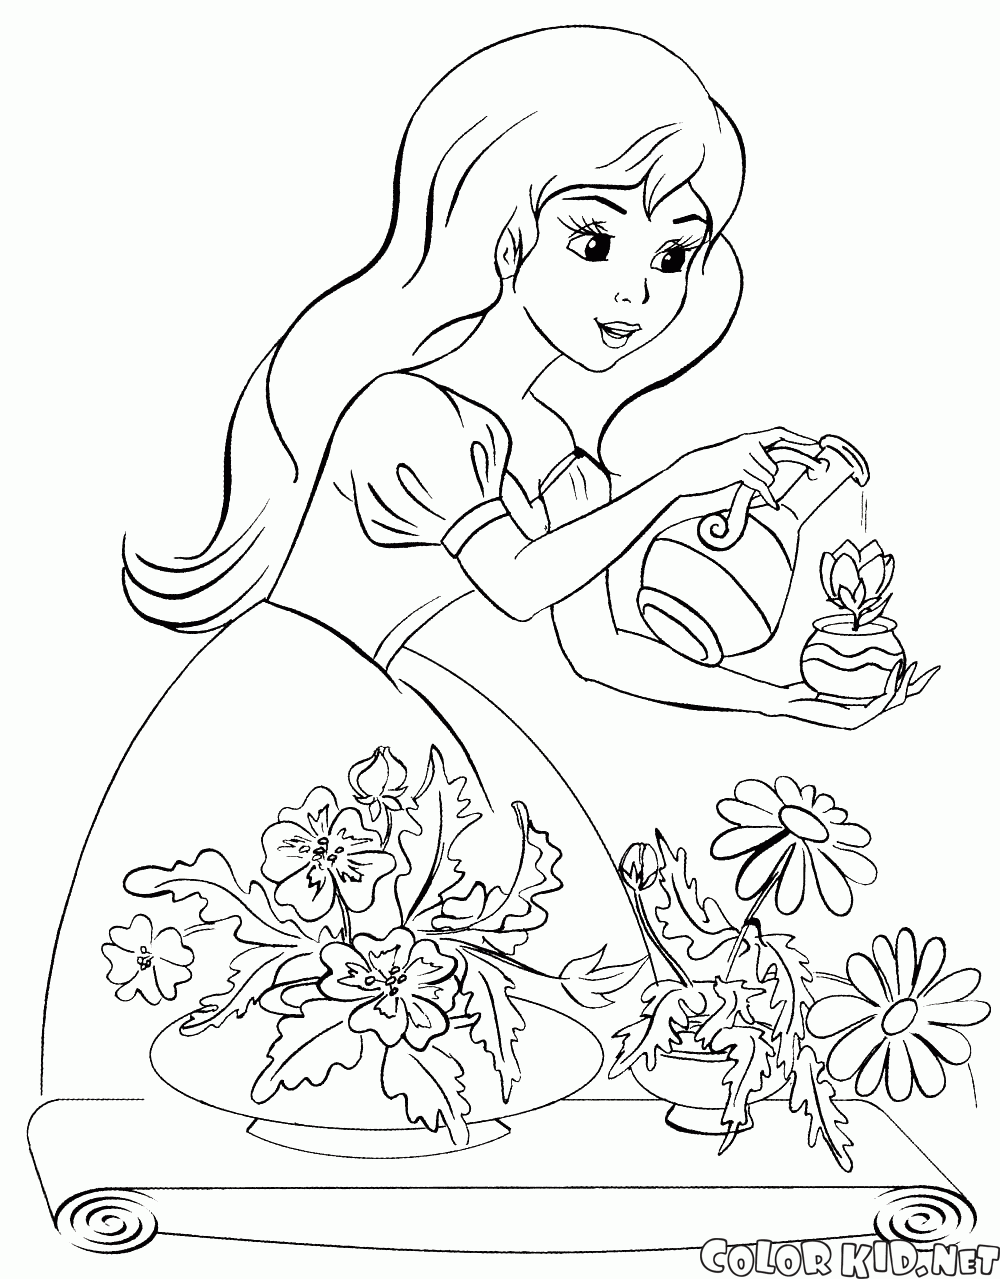 Principessa innaffia i fiori